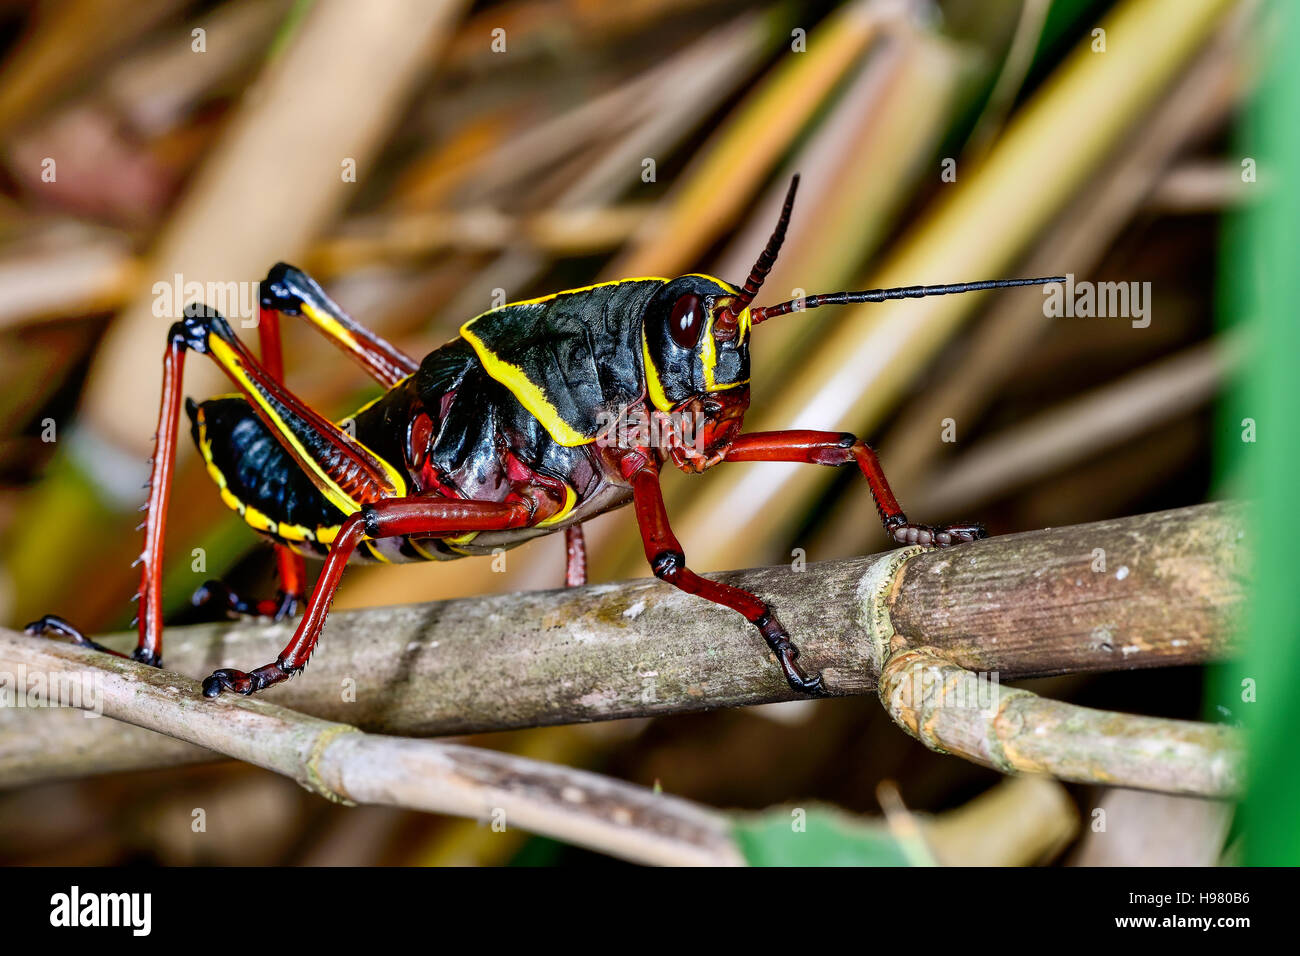 Eastern lubber grasshopper, Everglades, Floride Banque D'Images